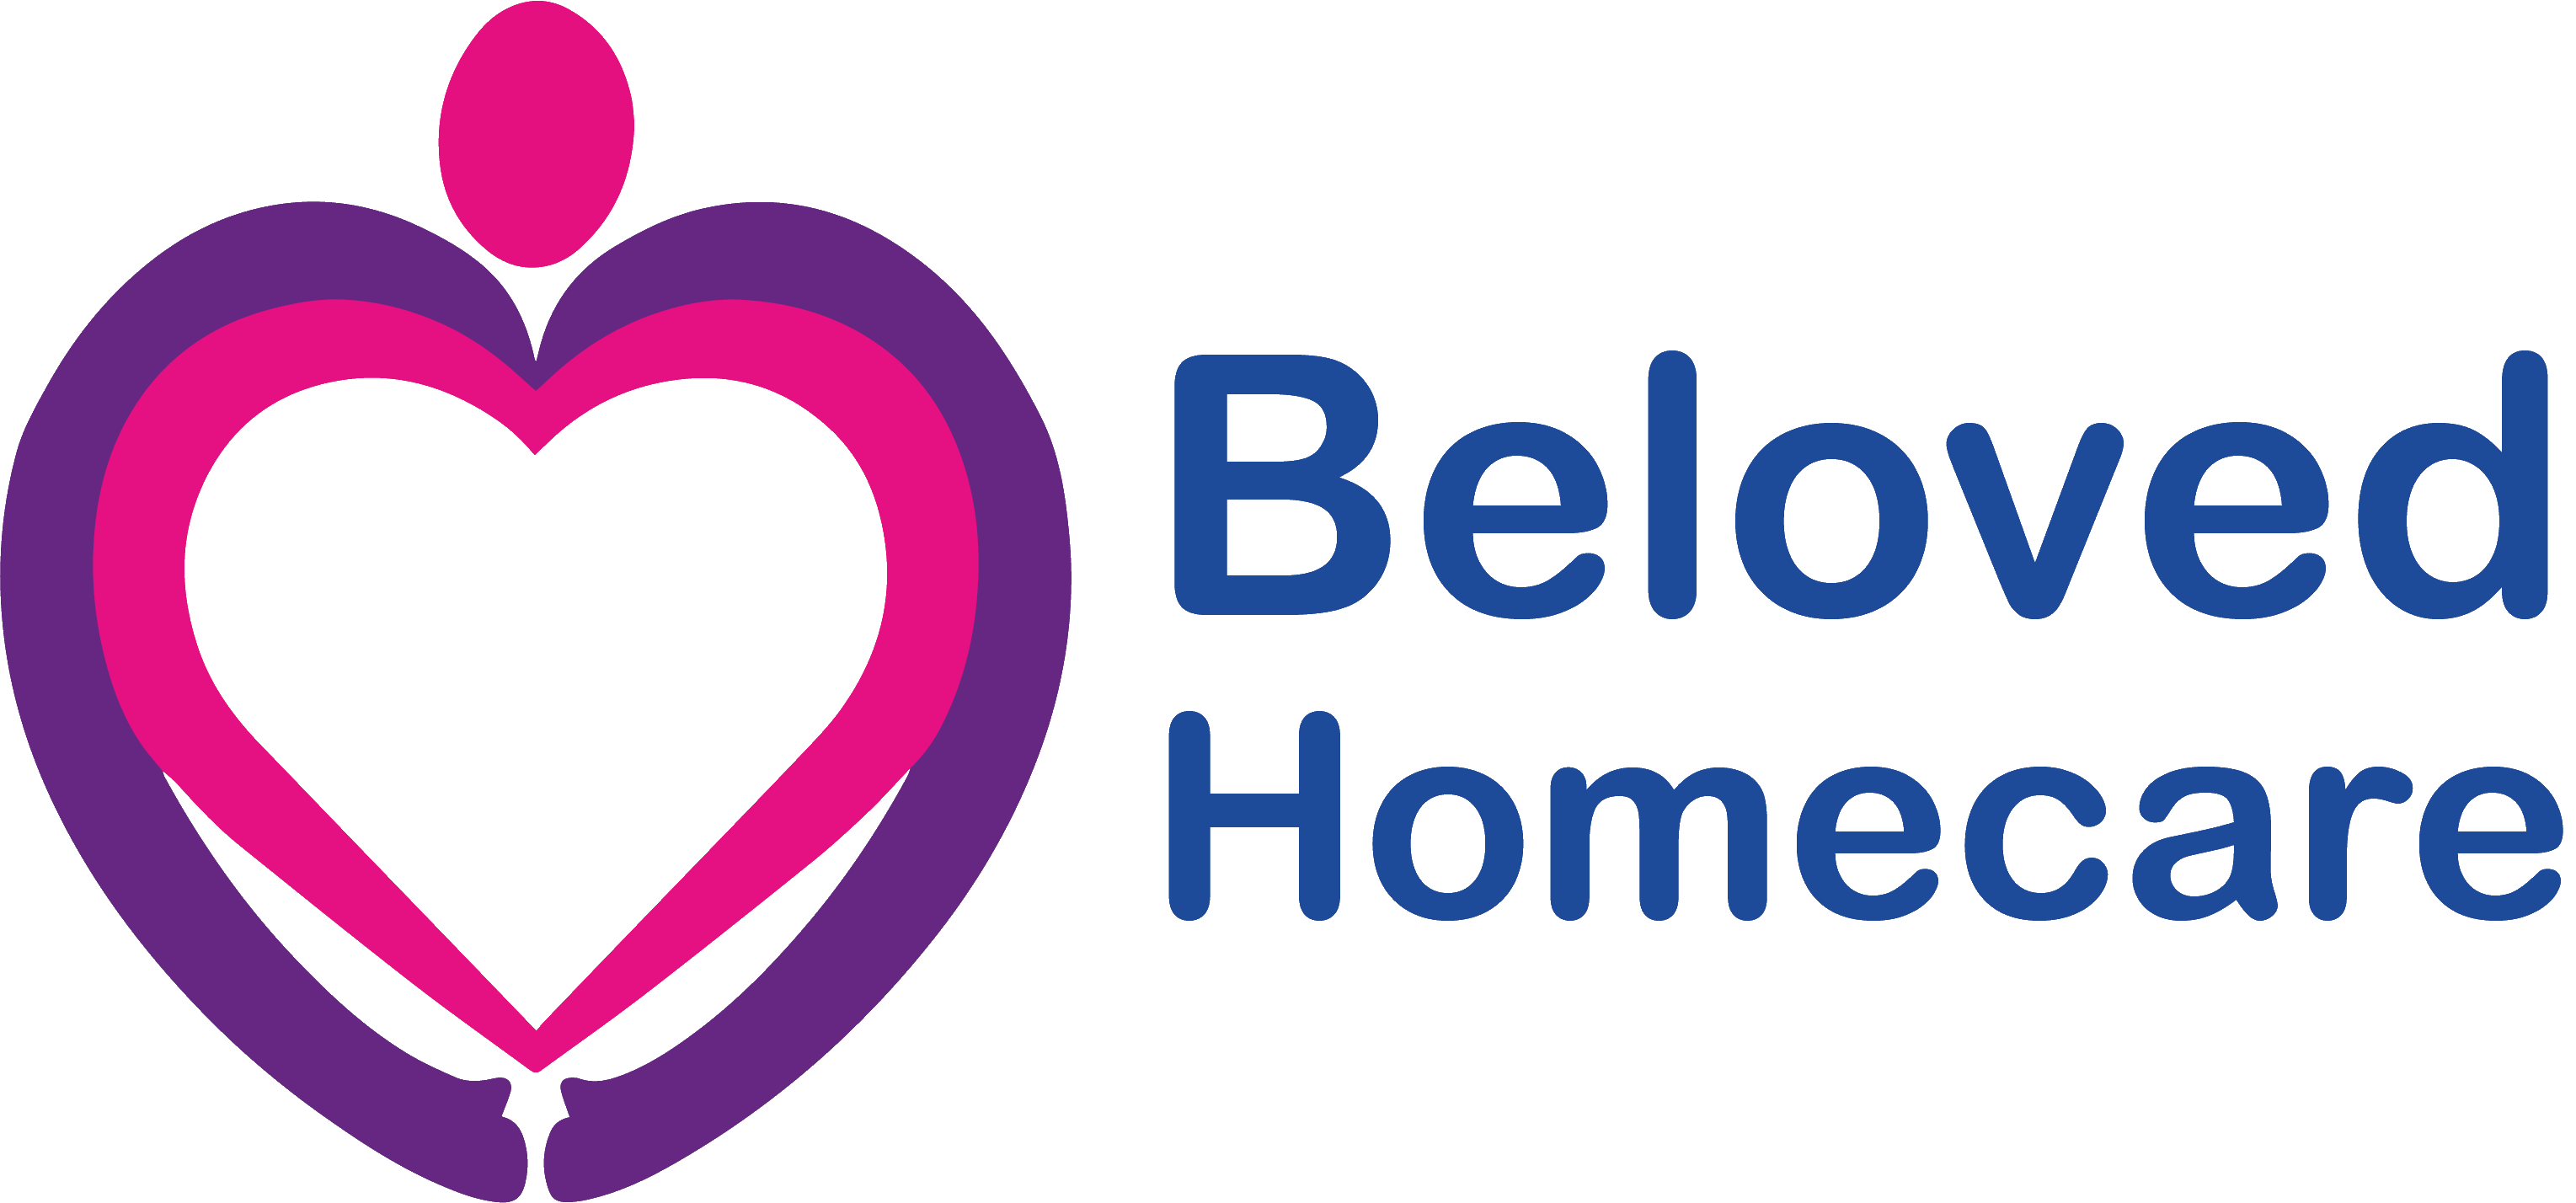 Company logo image - Beloved Homecare Ltd